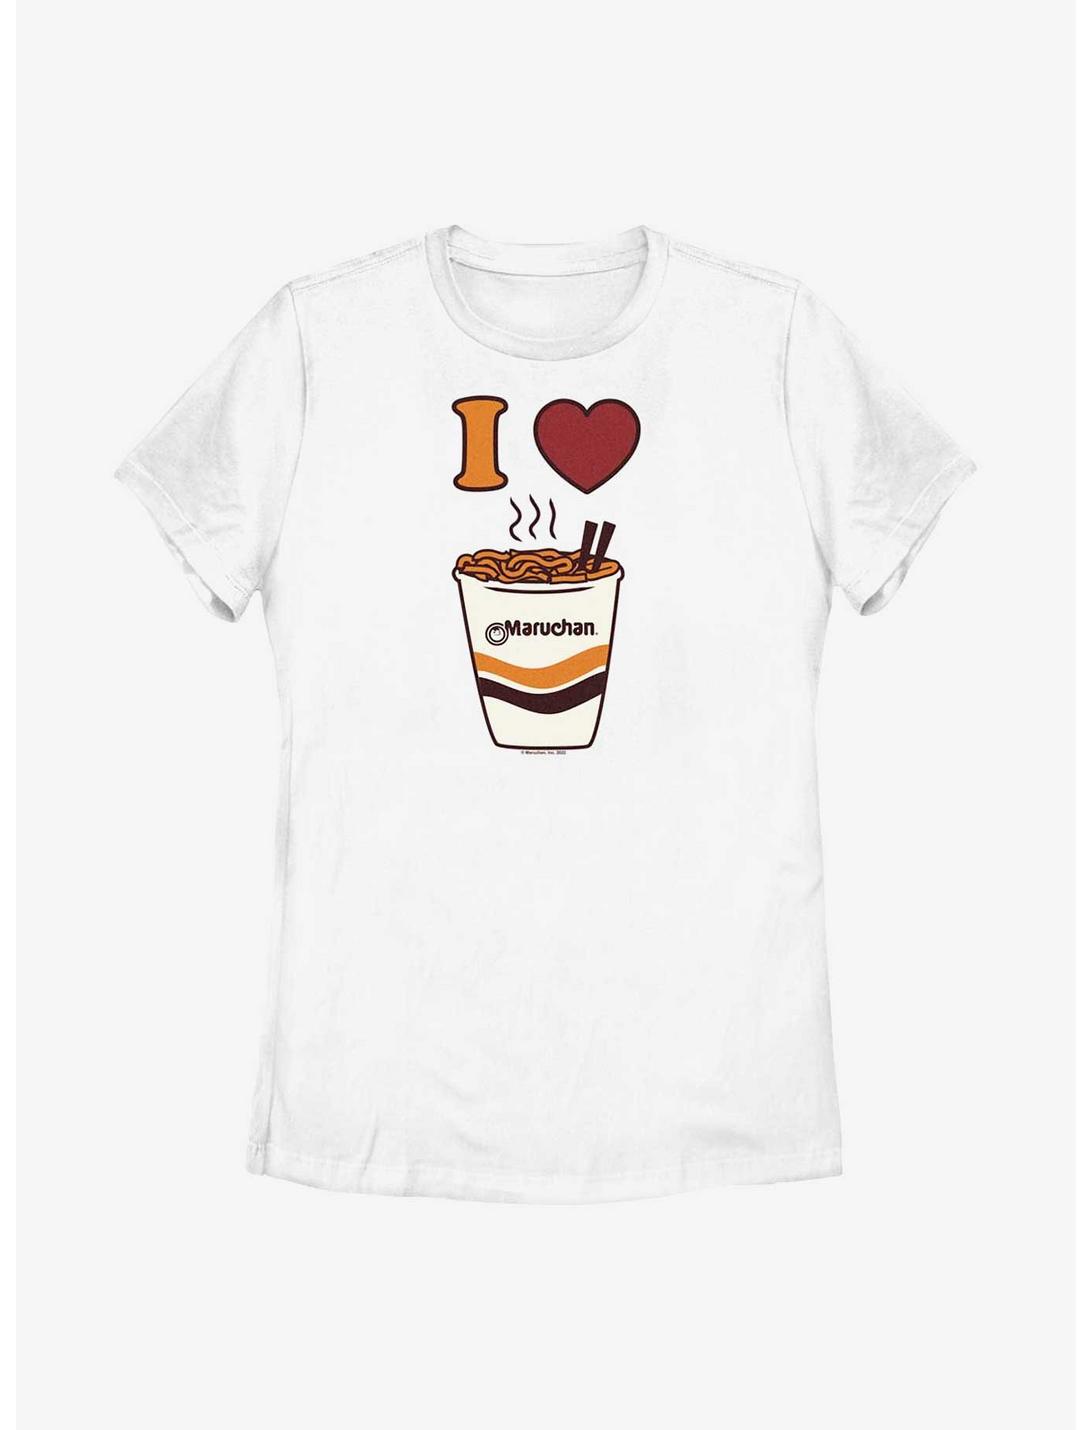 Maruchan I Heart Maruchan Womens T-Shirt, WHITE, hi-res